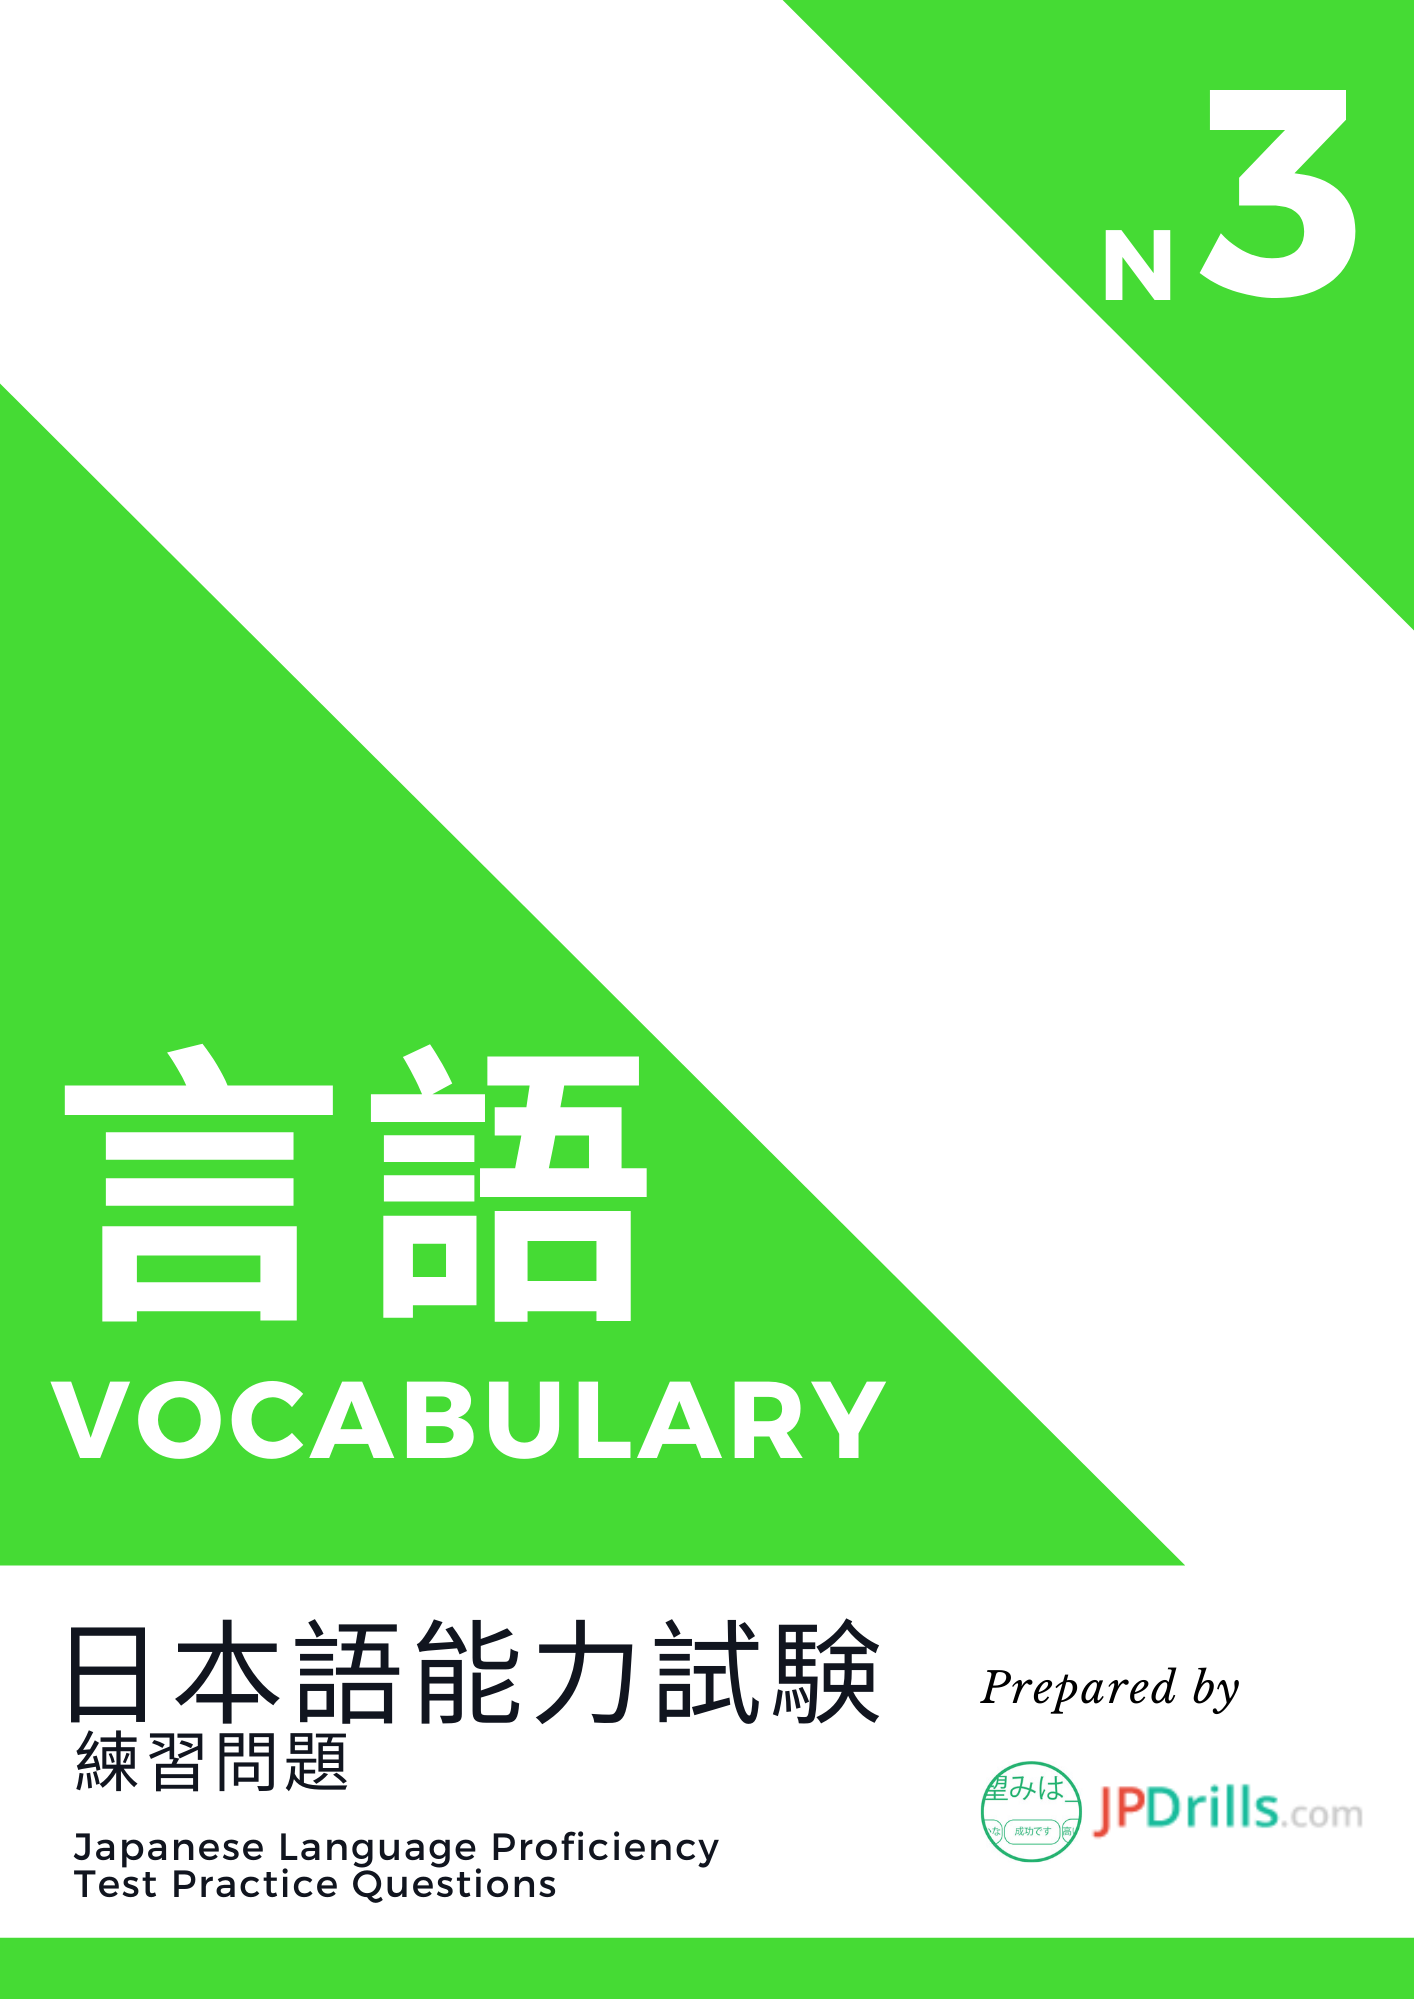 JLPT N3 Vocabulary quiz logo